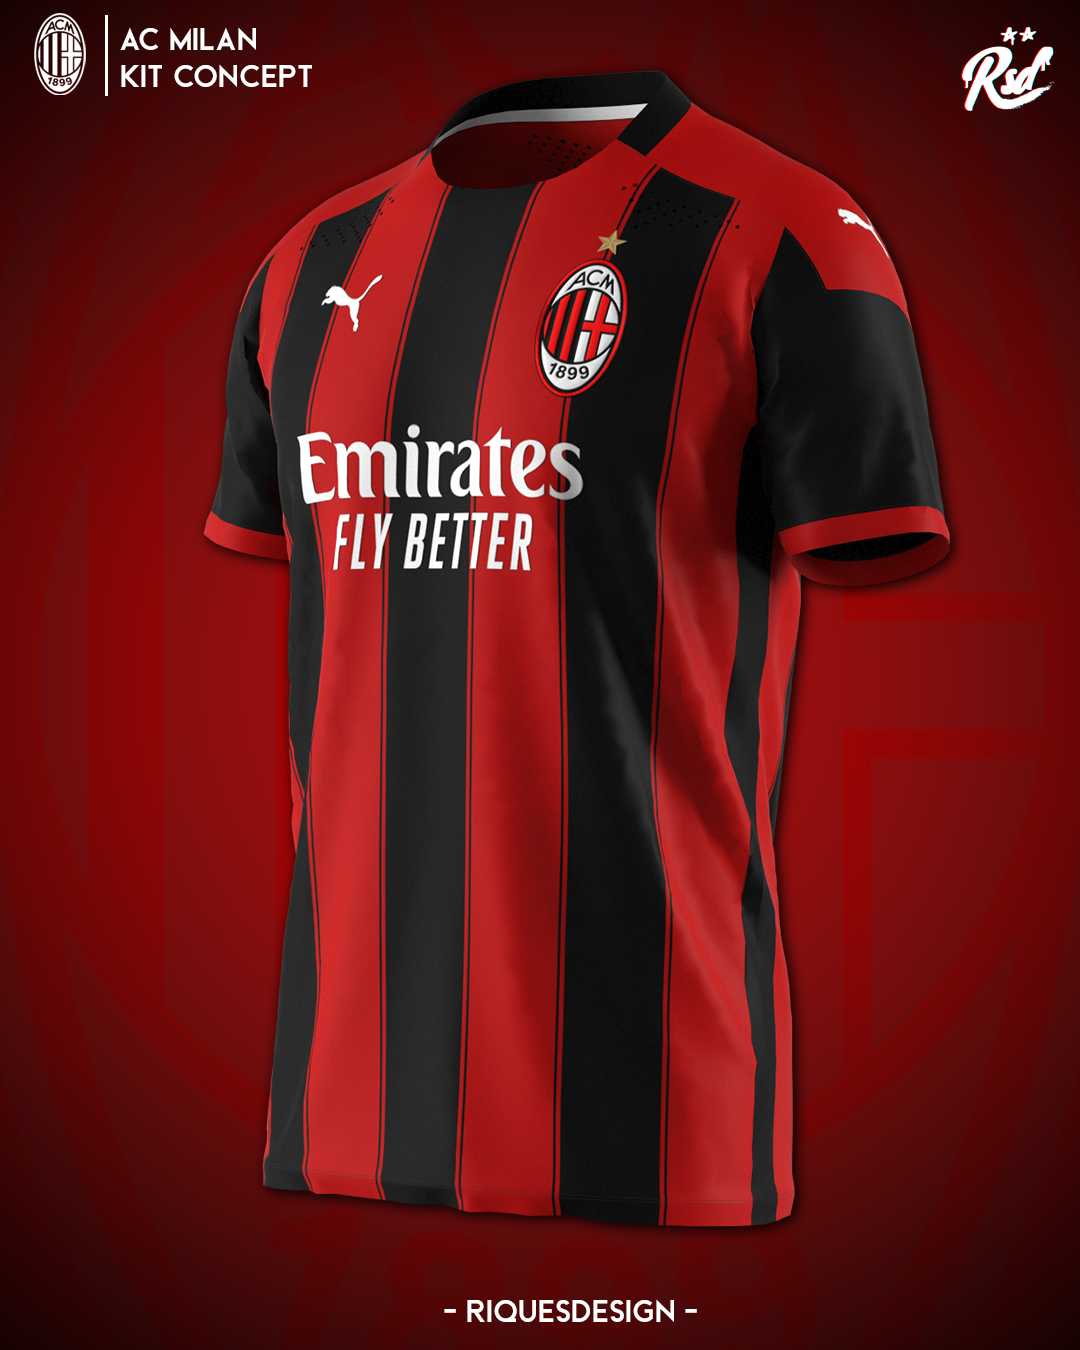 AC Milan X Puma | Kit Concept